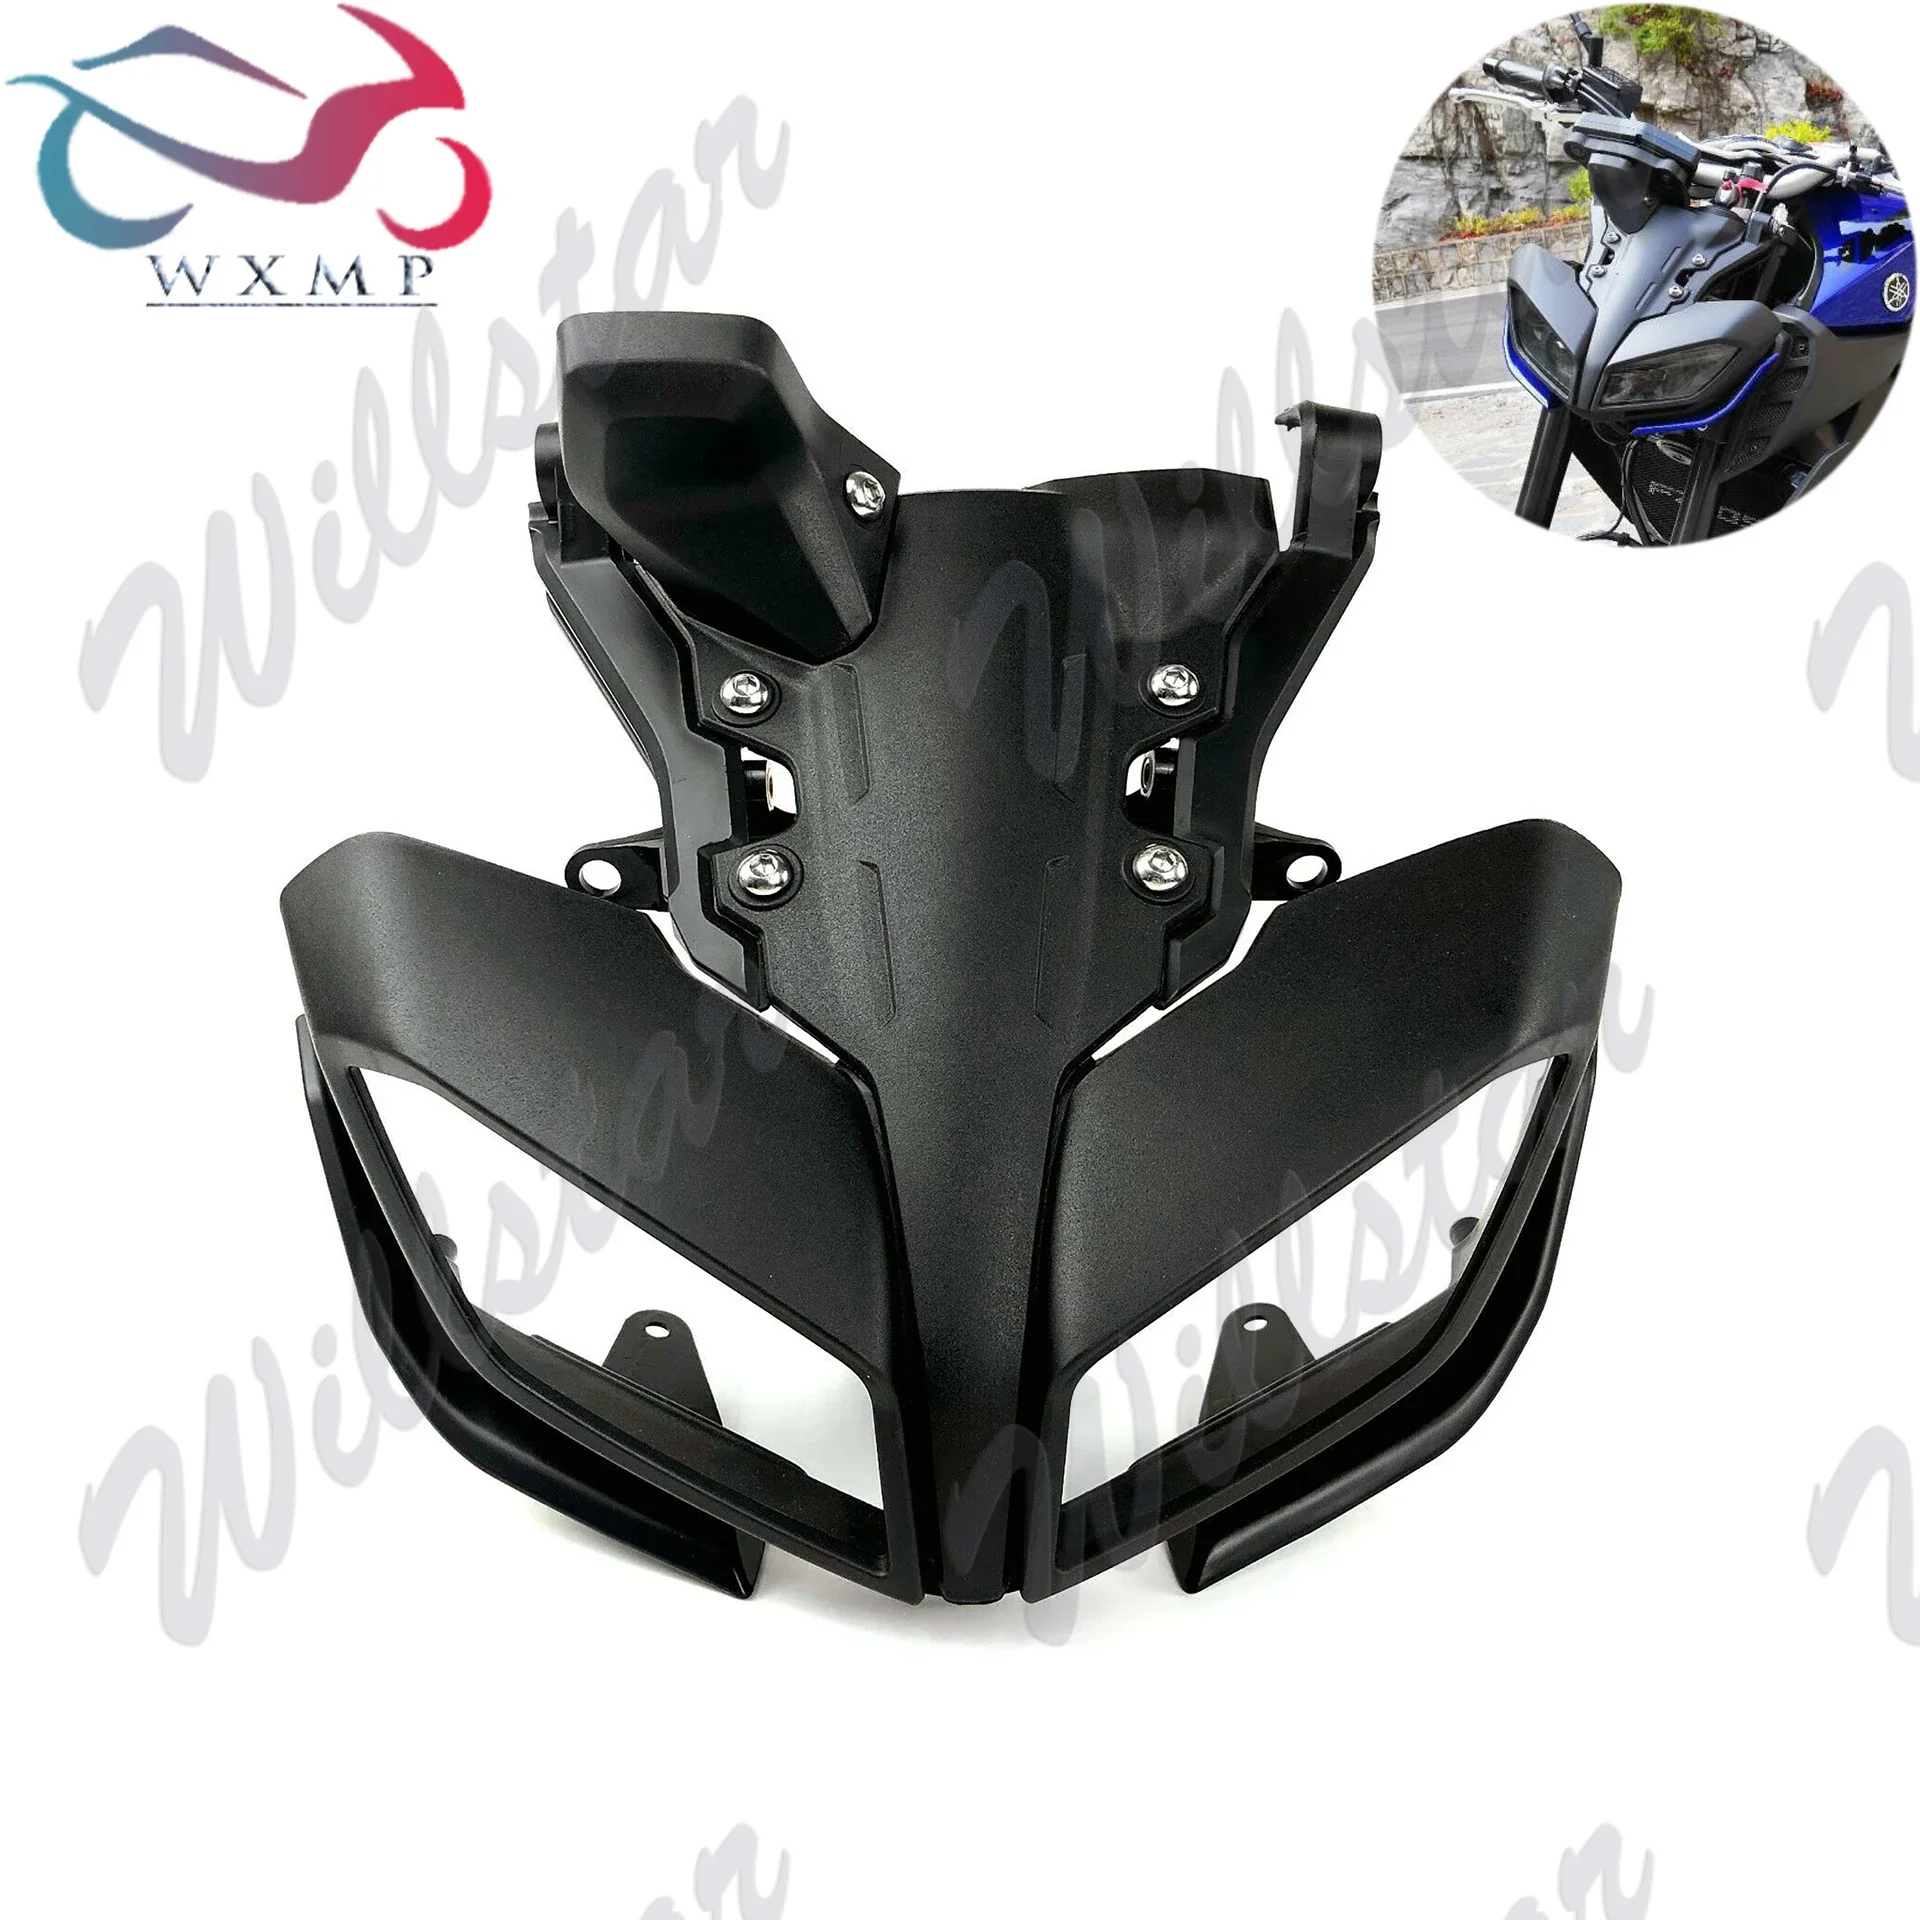 

Headlight Front Panel Cover Bracket Fairing Cowl For Yamaha MT-09 FZ09 2017-2020